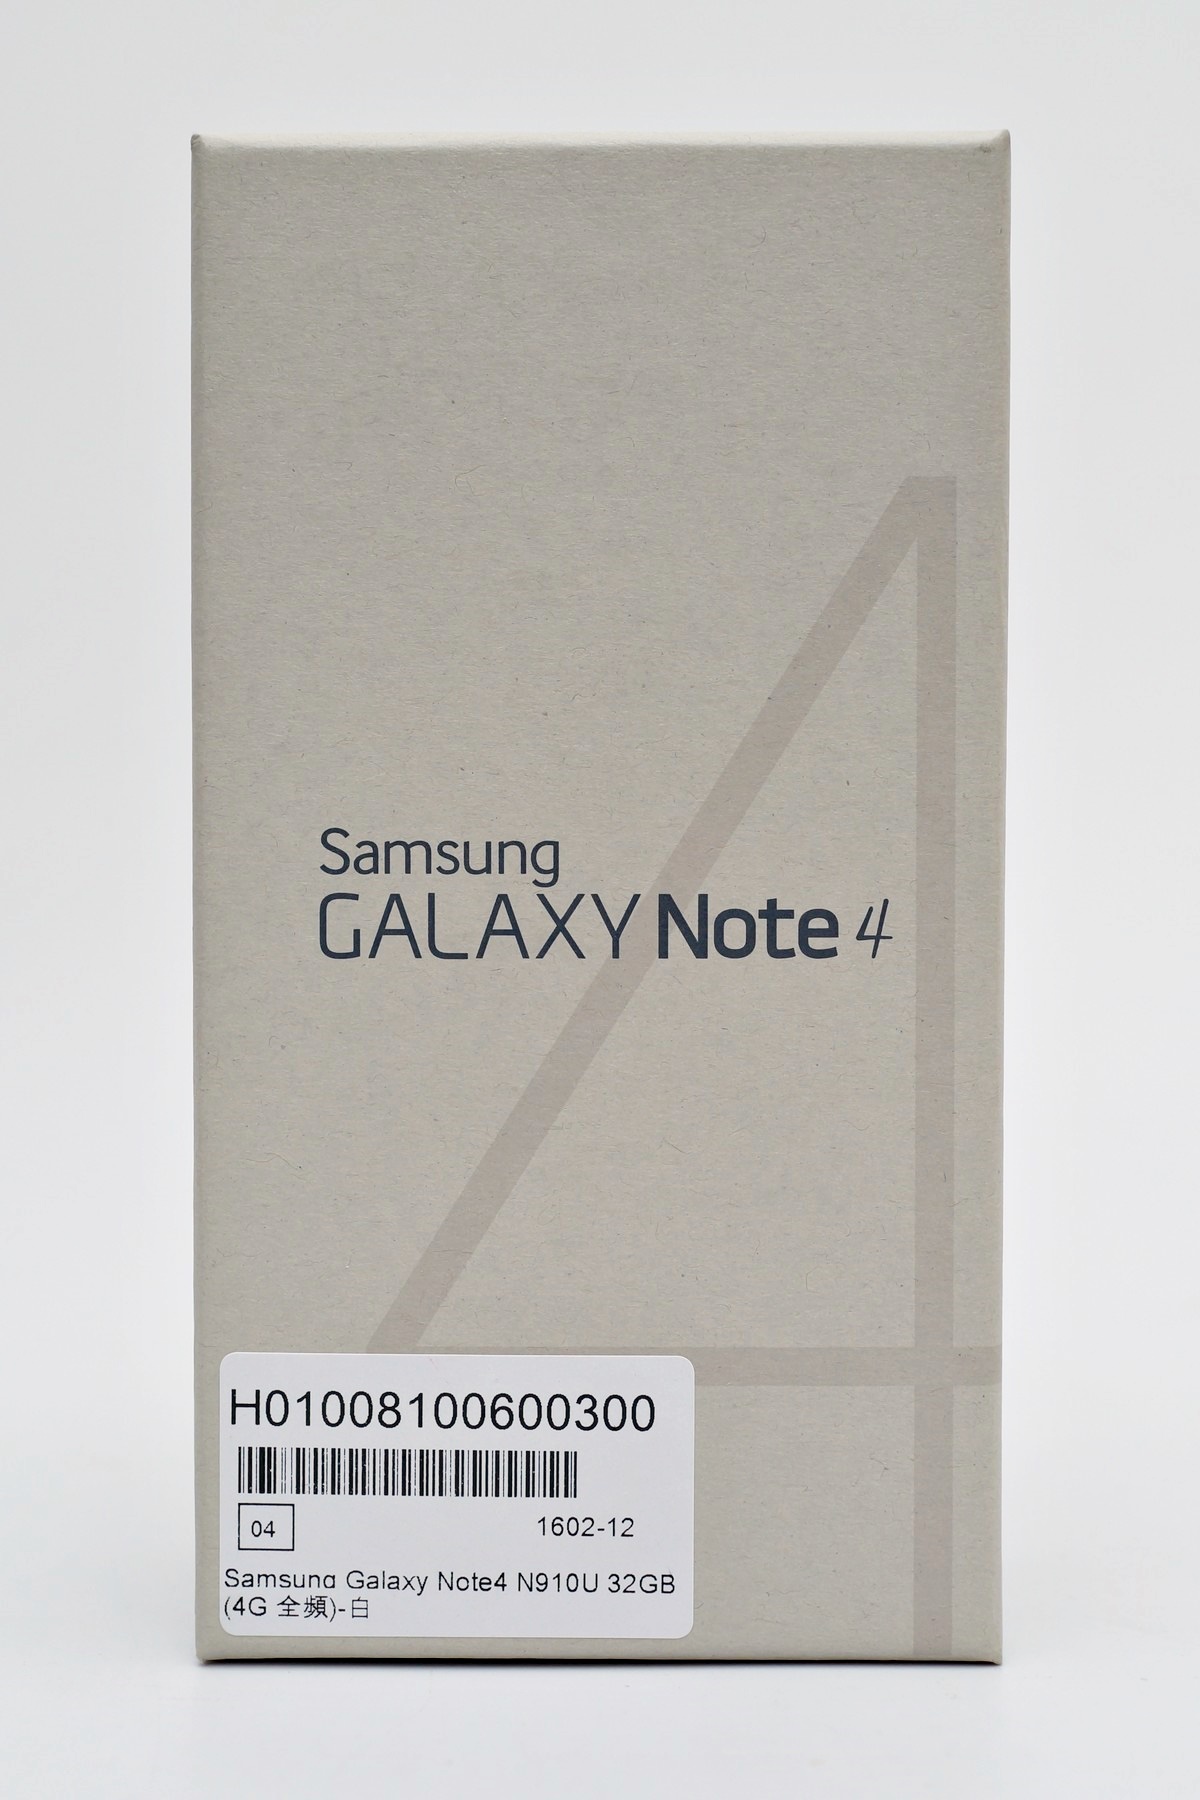 [XF] 寫意世代 登峰之品 SAMSUNG GALAXY Note 4 評測